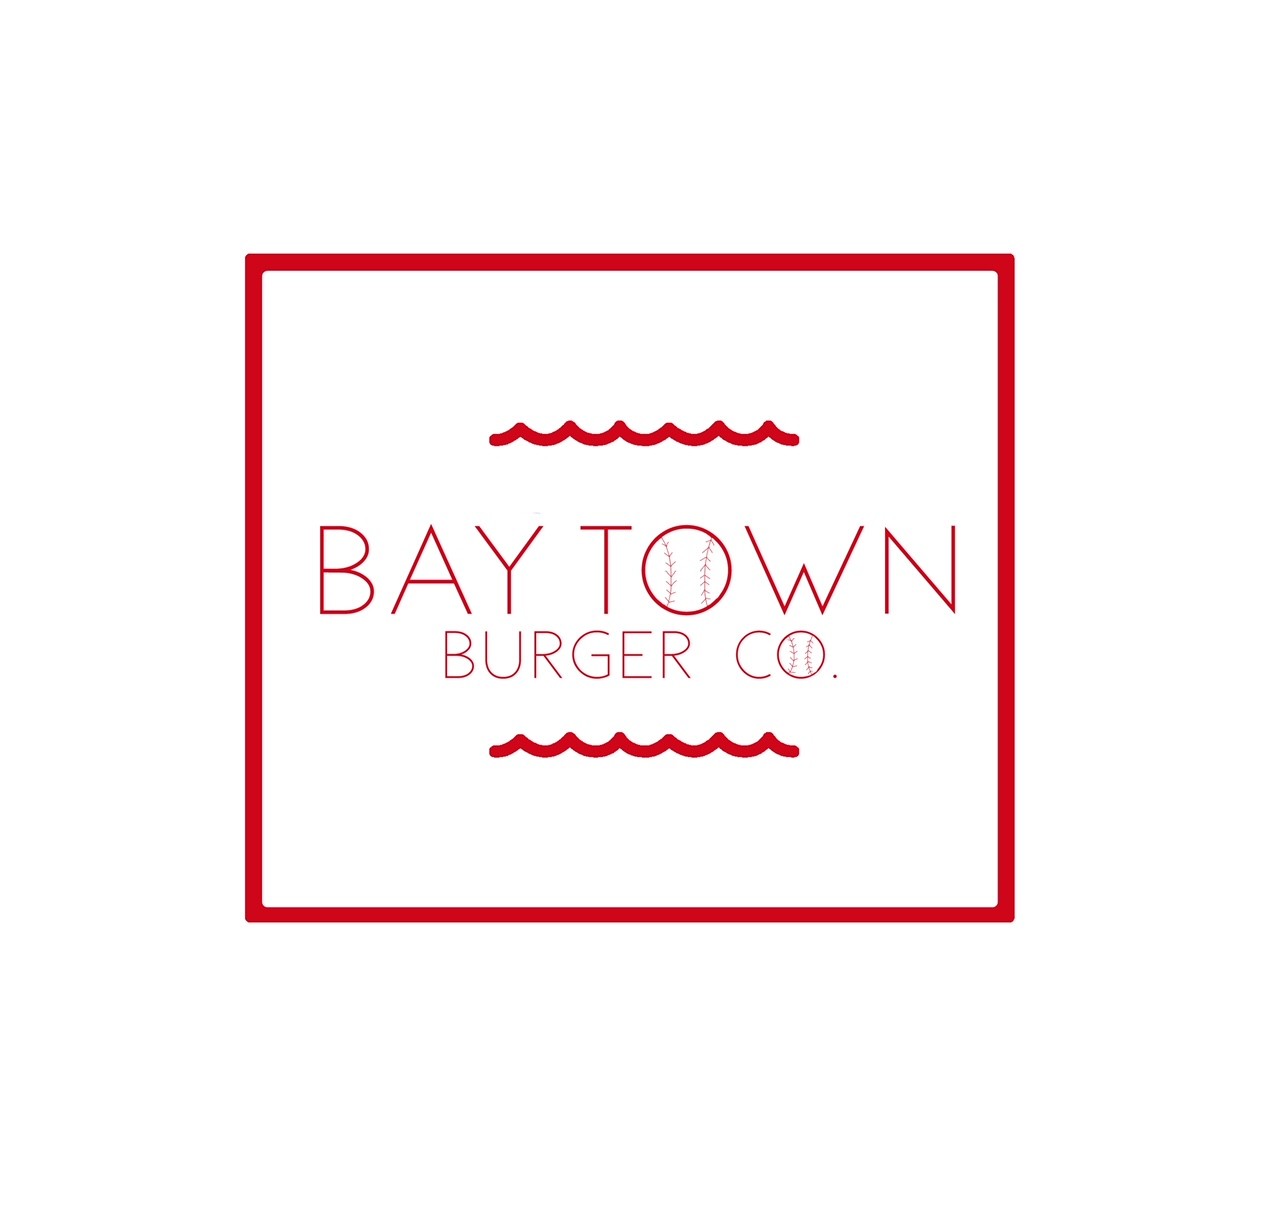 Bay Town Burger Co. \ Mo'Bay Beignet Co. - West Mobile